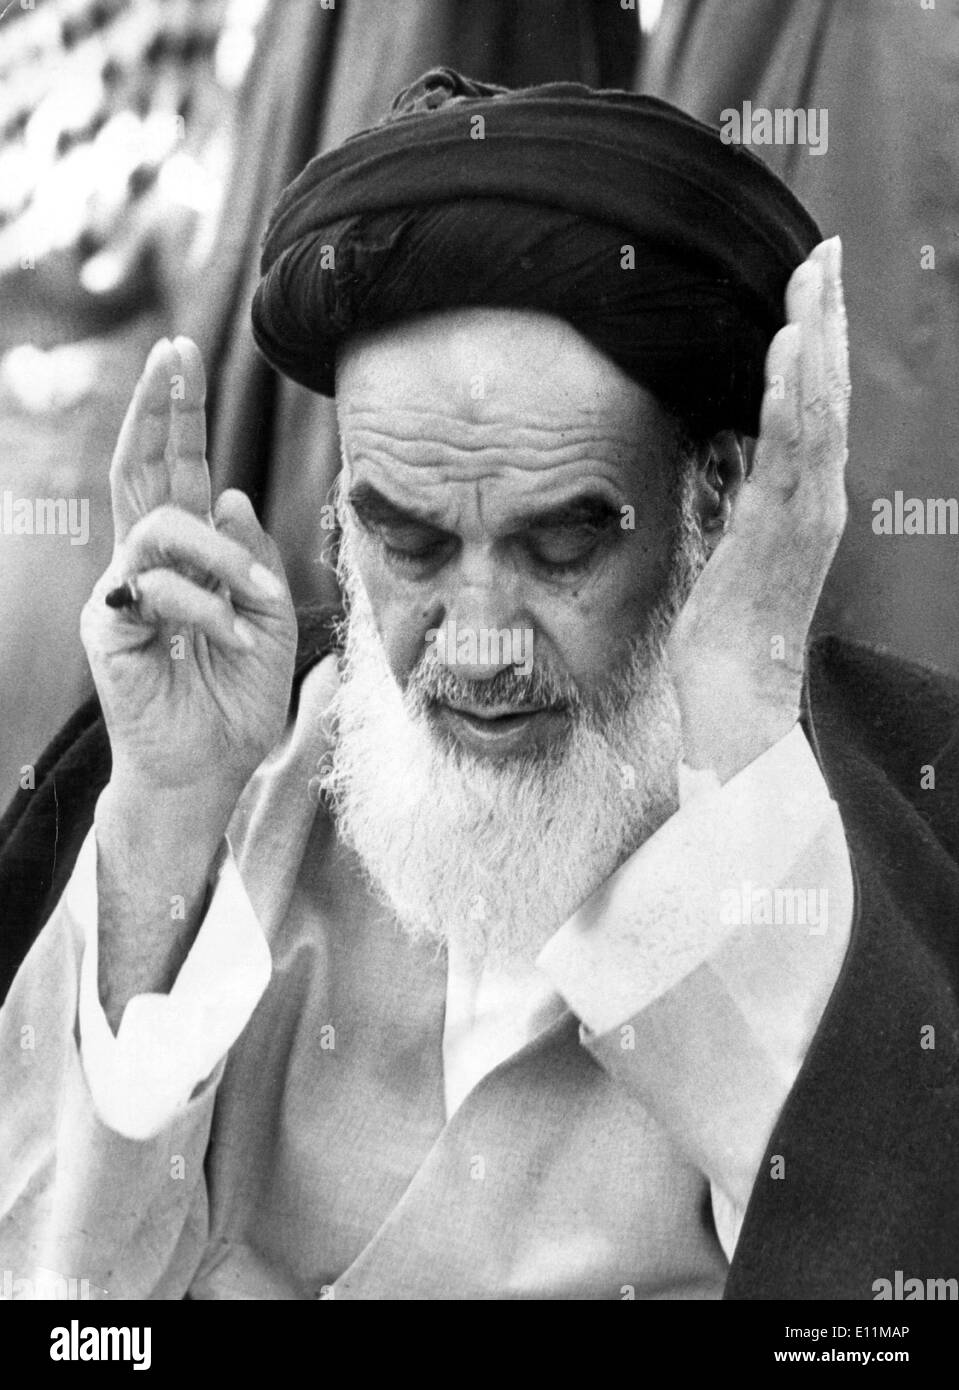 5092702 (900326) Ayatollah KHOMEINI (24.09.1902 - 03.06.1989, Ruhollah Mussawi HENDI) Iranischer Religionsf Hrer Und Politiker, Stockfoto